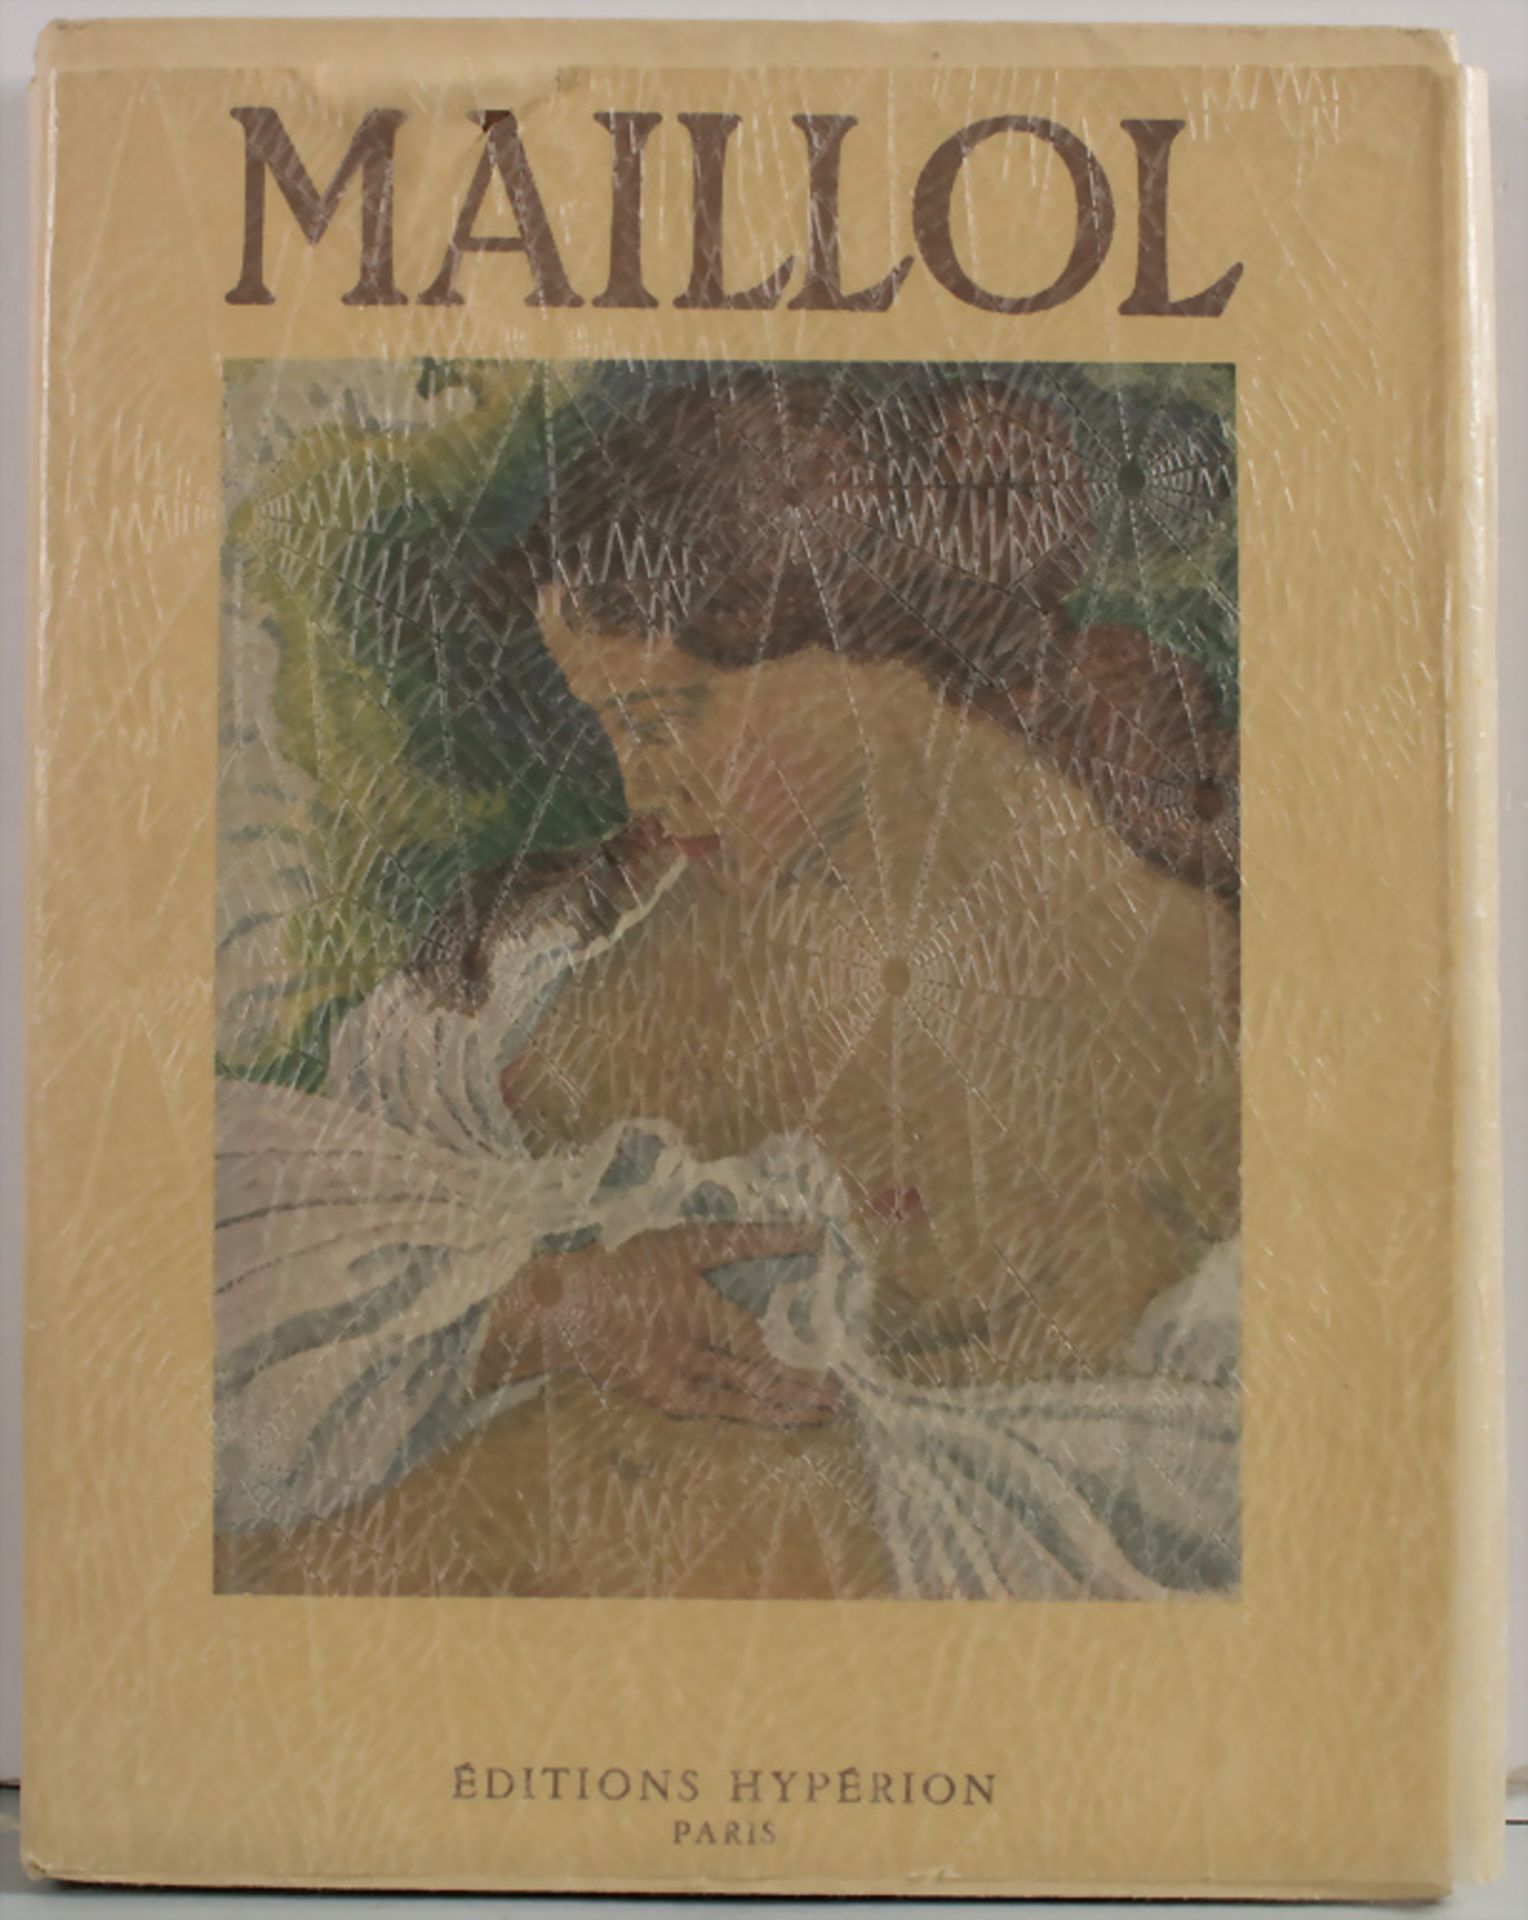 John Rewald, 'Maillol', Hyperion, 1939